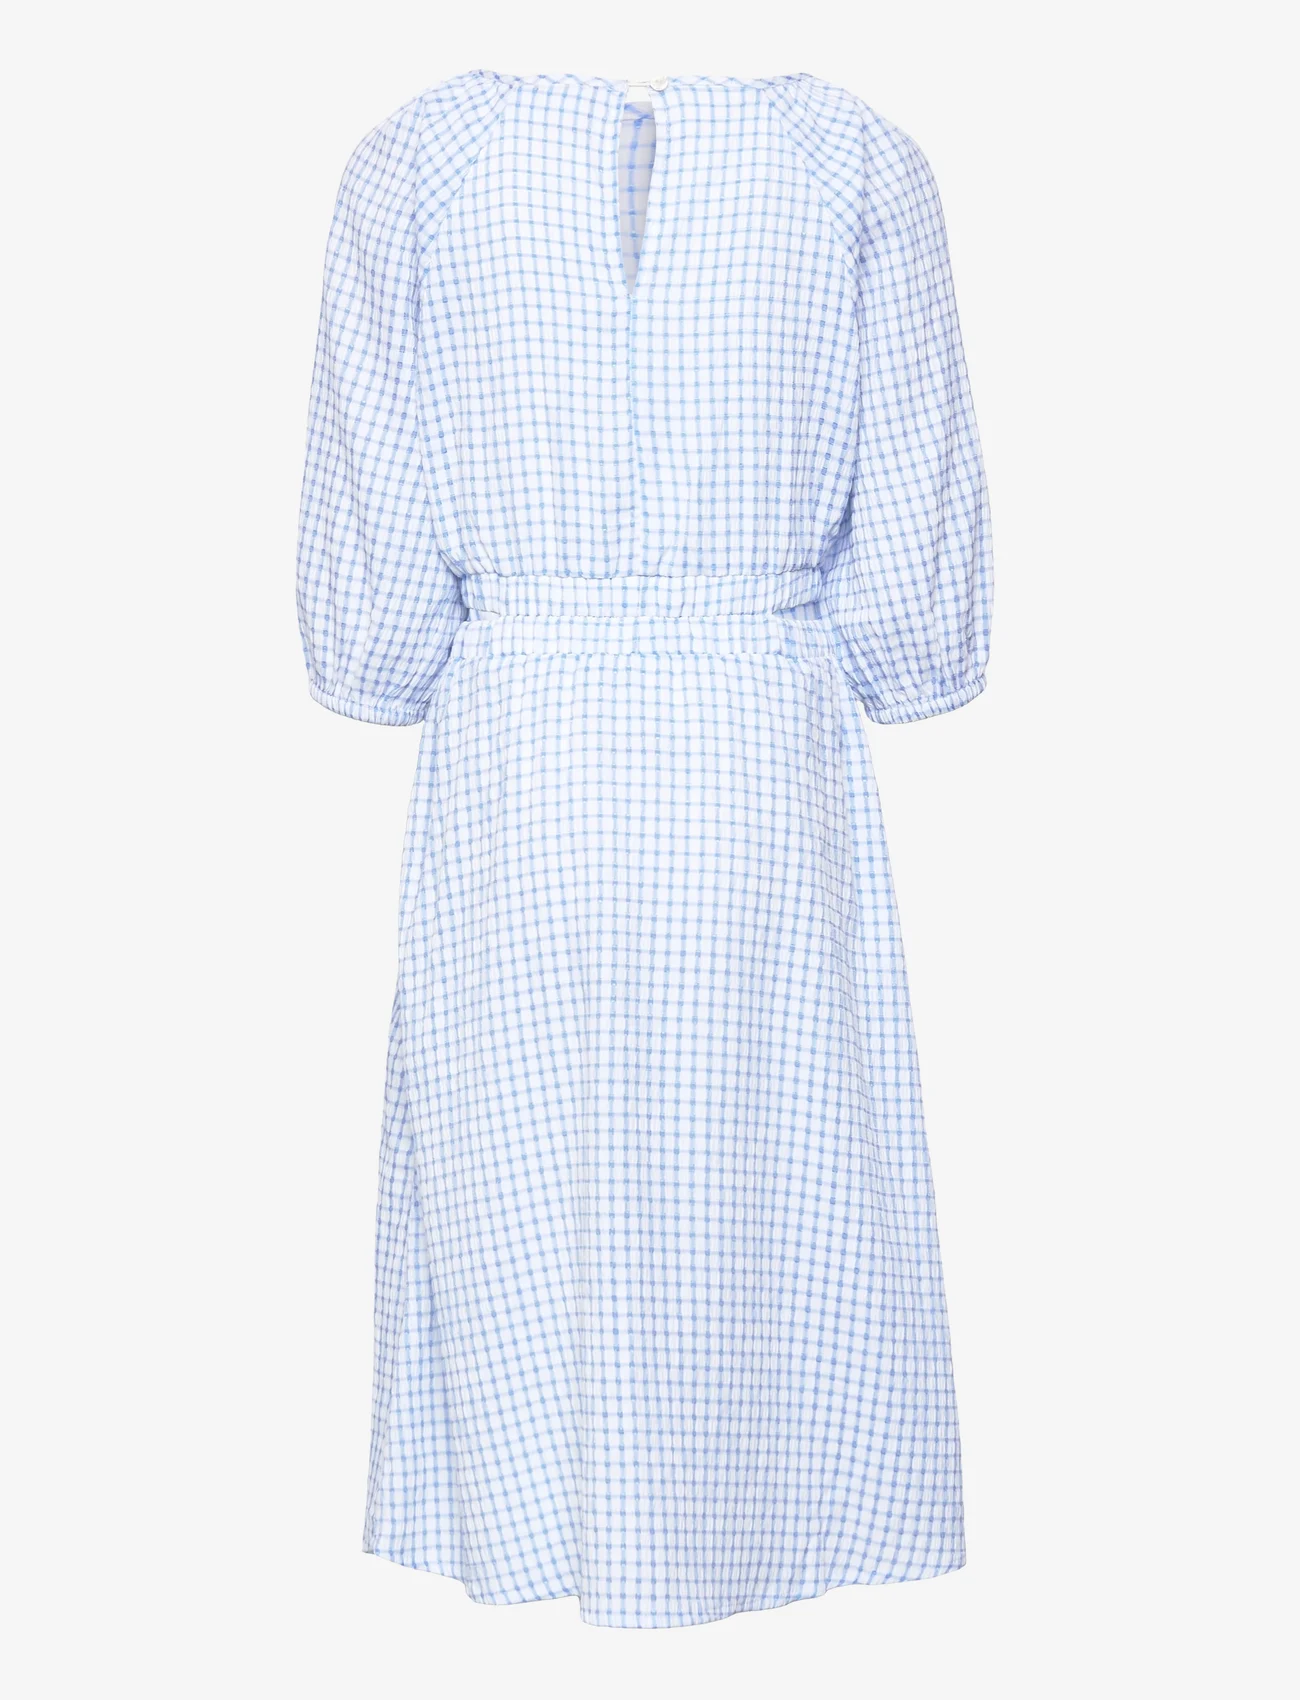 Grunt - Osgood Dress - short-sleeved casual dresses - blue - 1